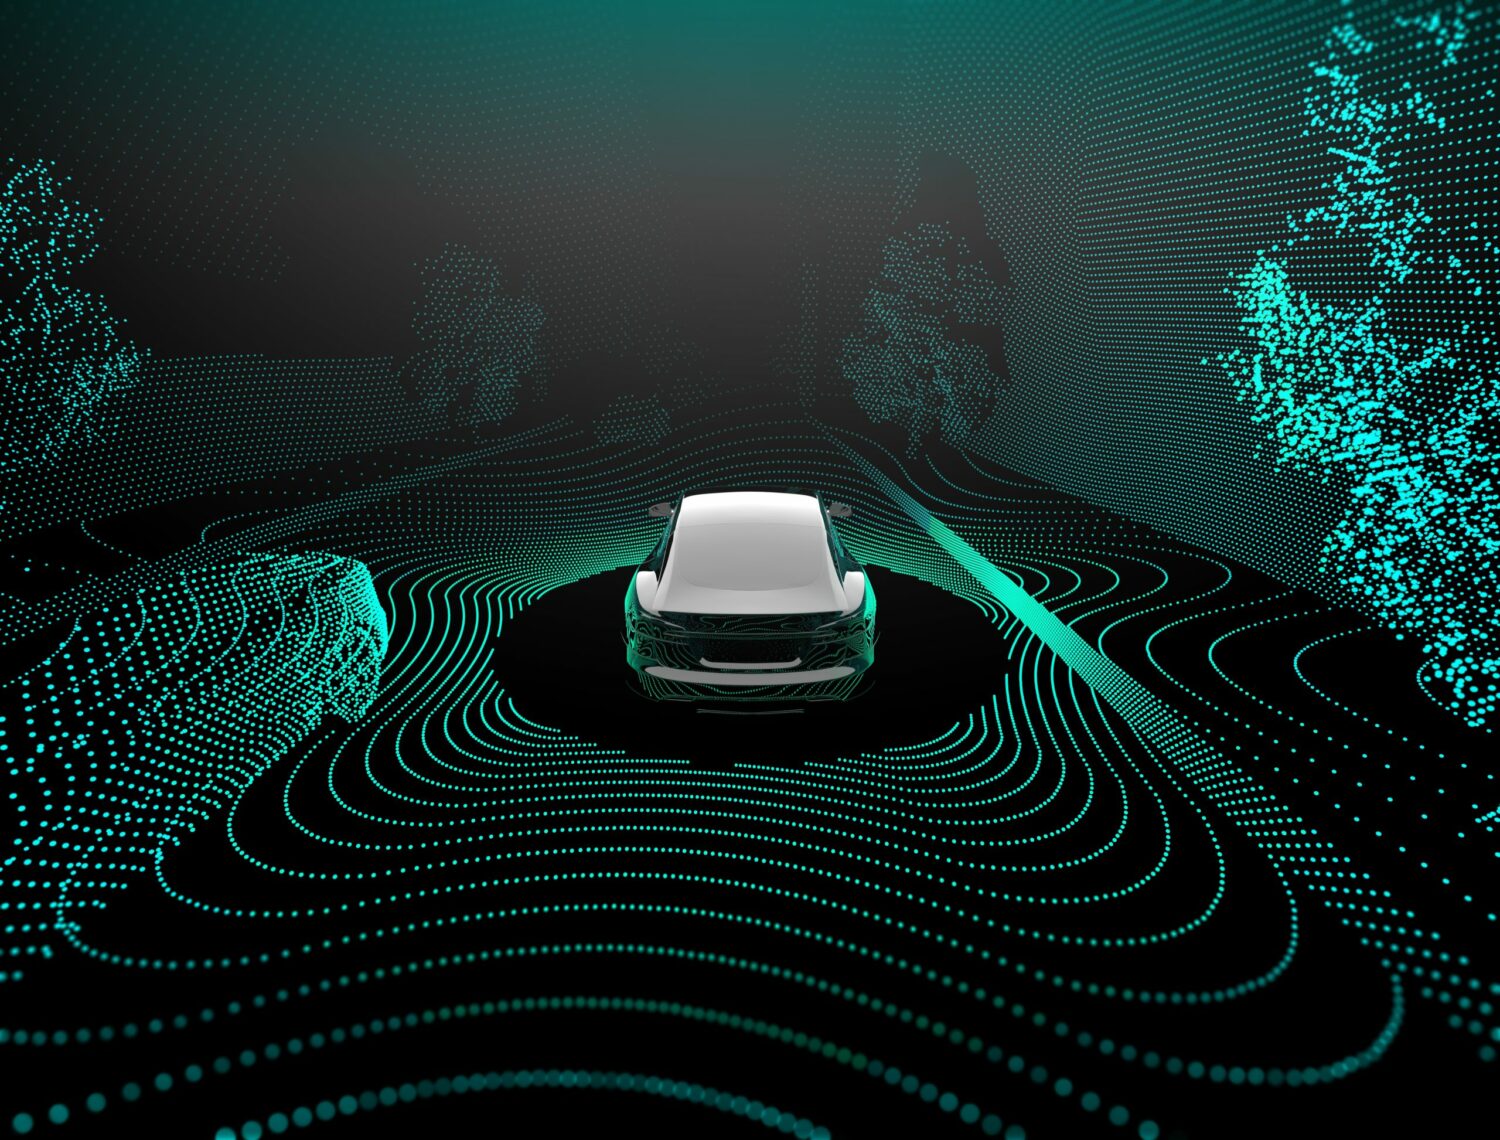 The road ahead for autonomous vehicles